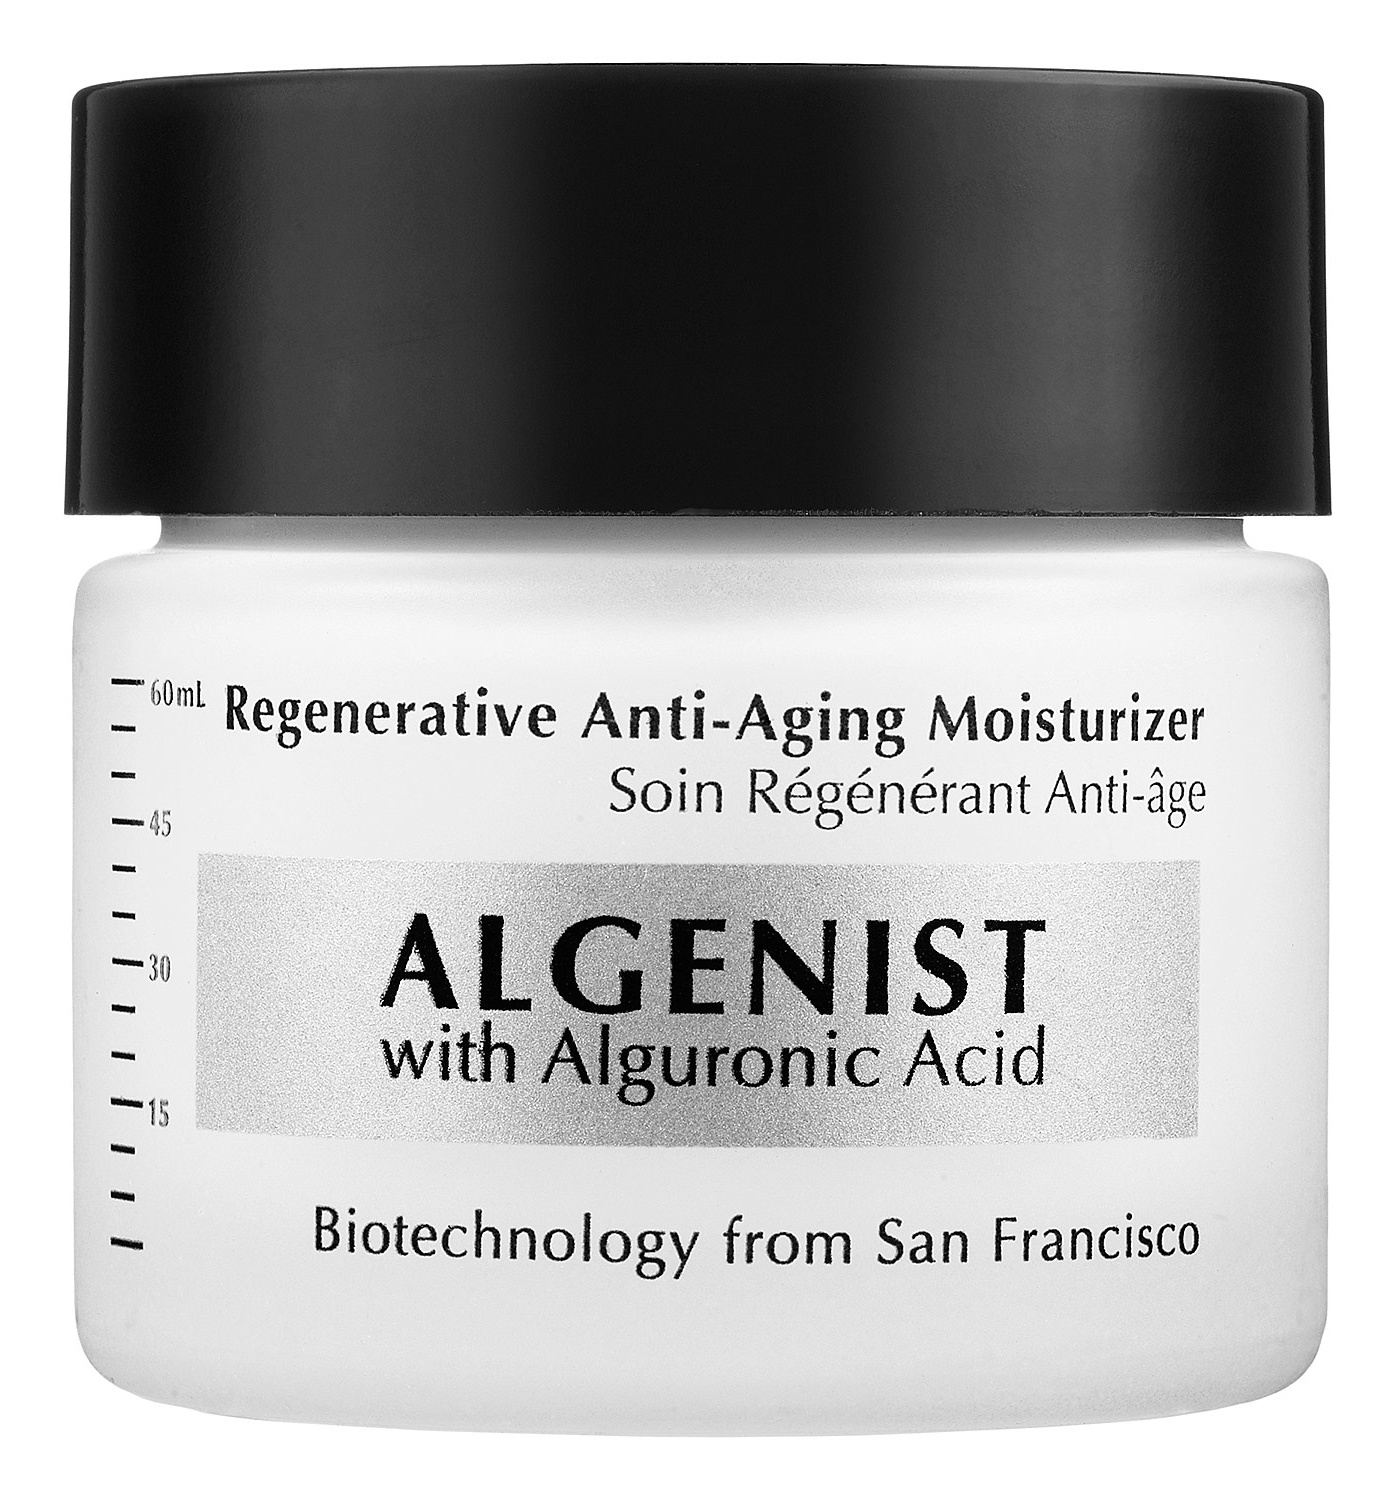 Algenist Regenerative Anti-Aging Moisturizer